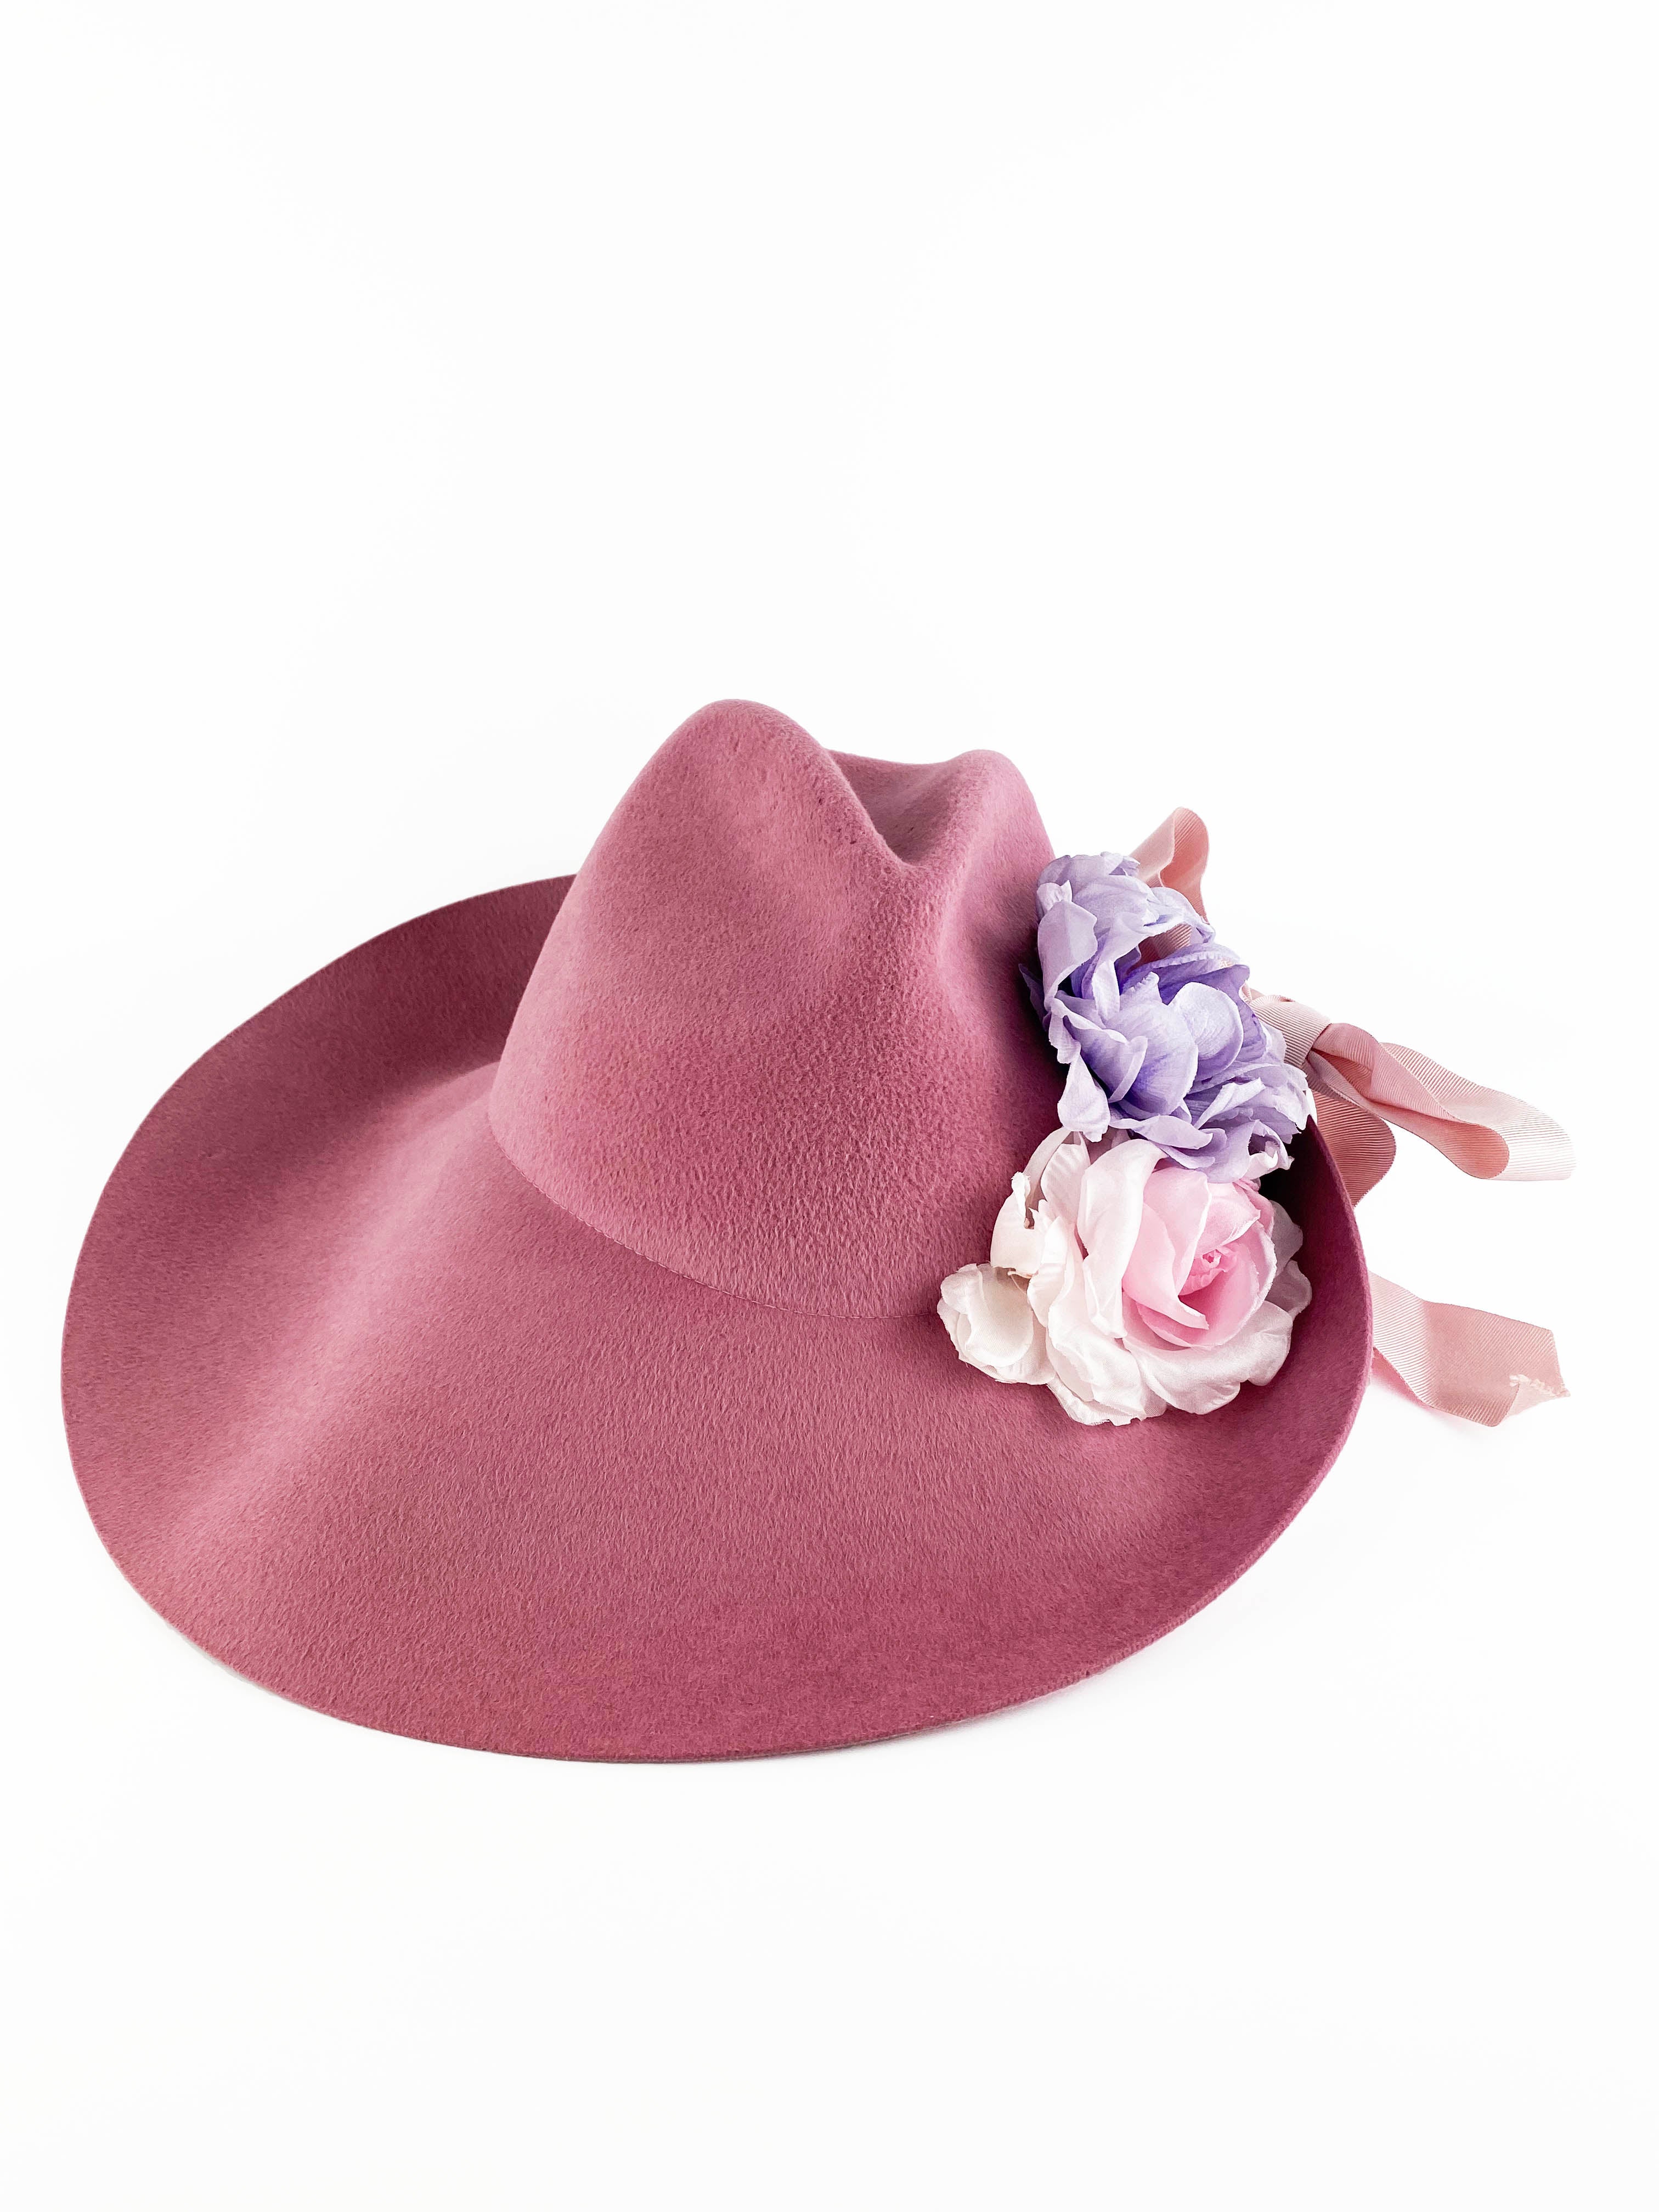 gucci-pink-hat-4.jpg